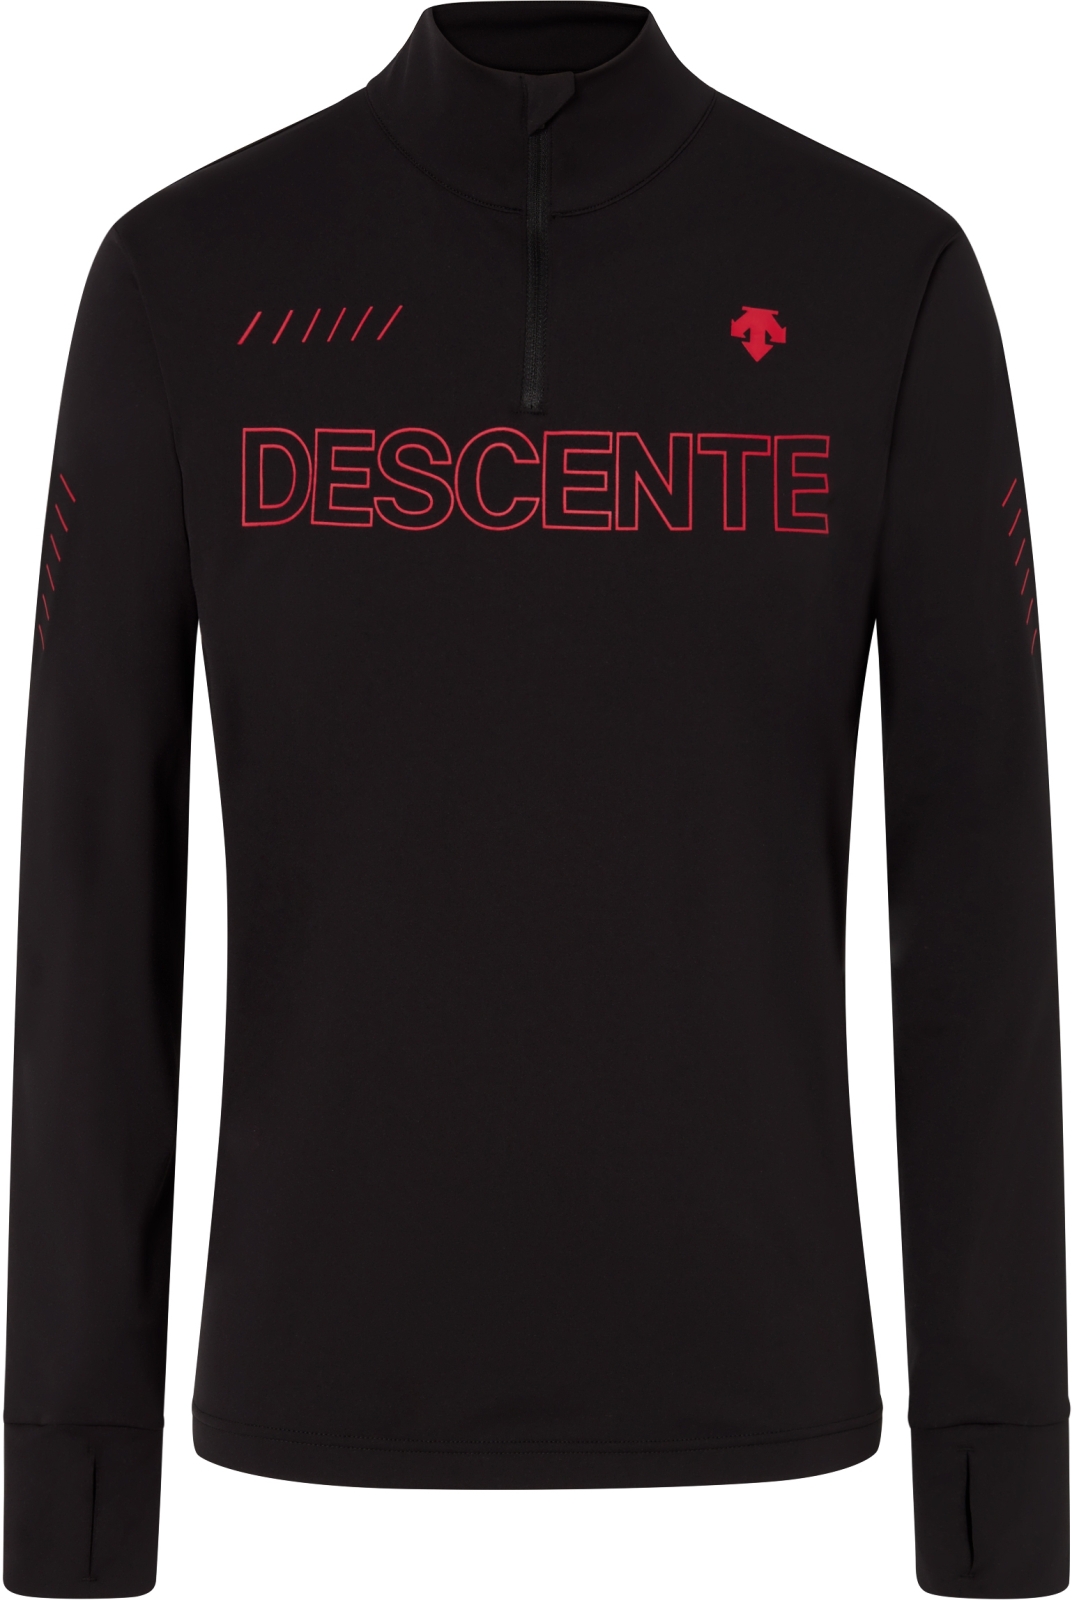 E-shop Descente Descente 1/4 Zip T-Neck - Black XS